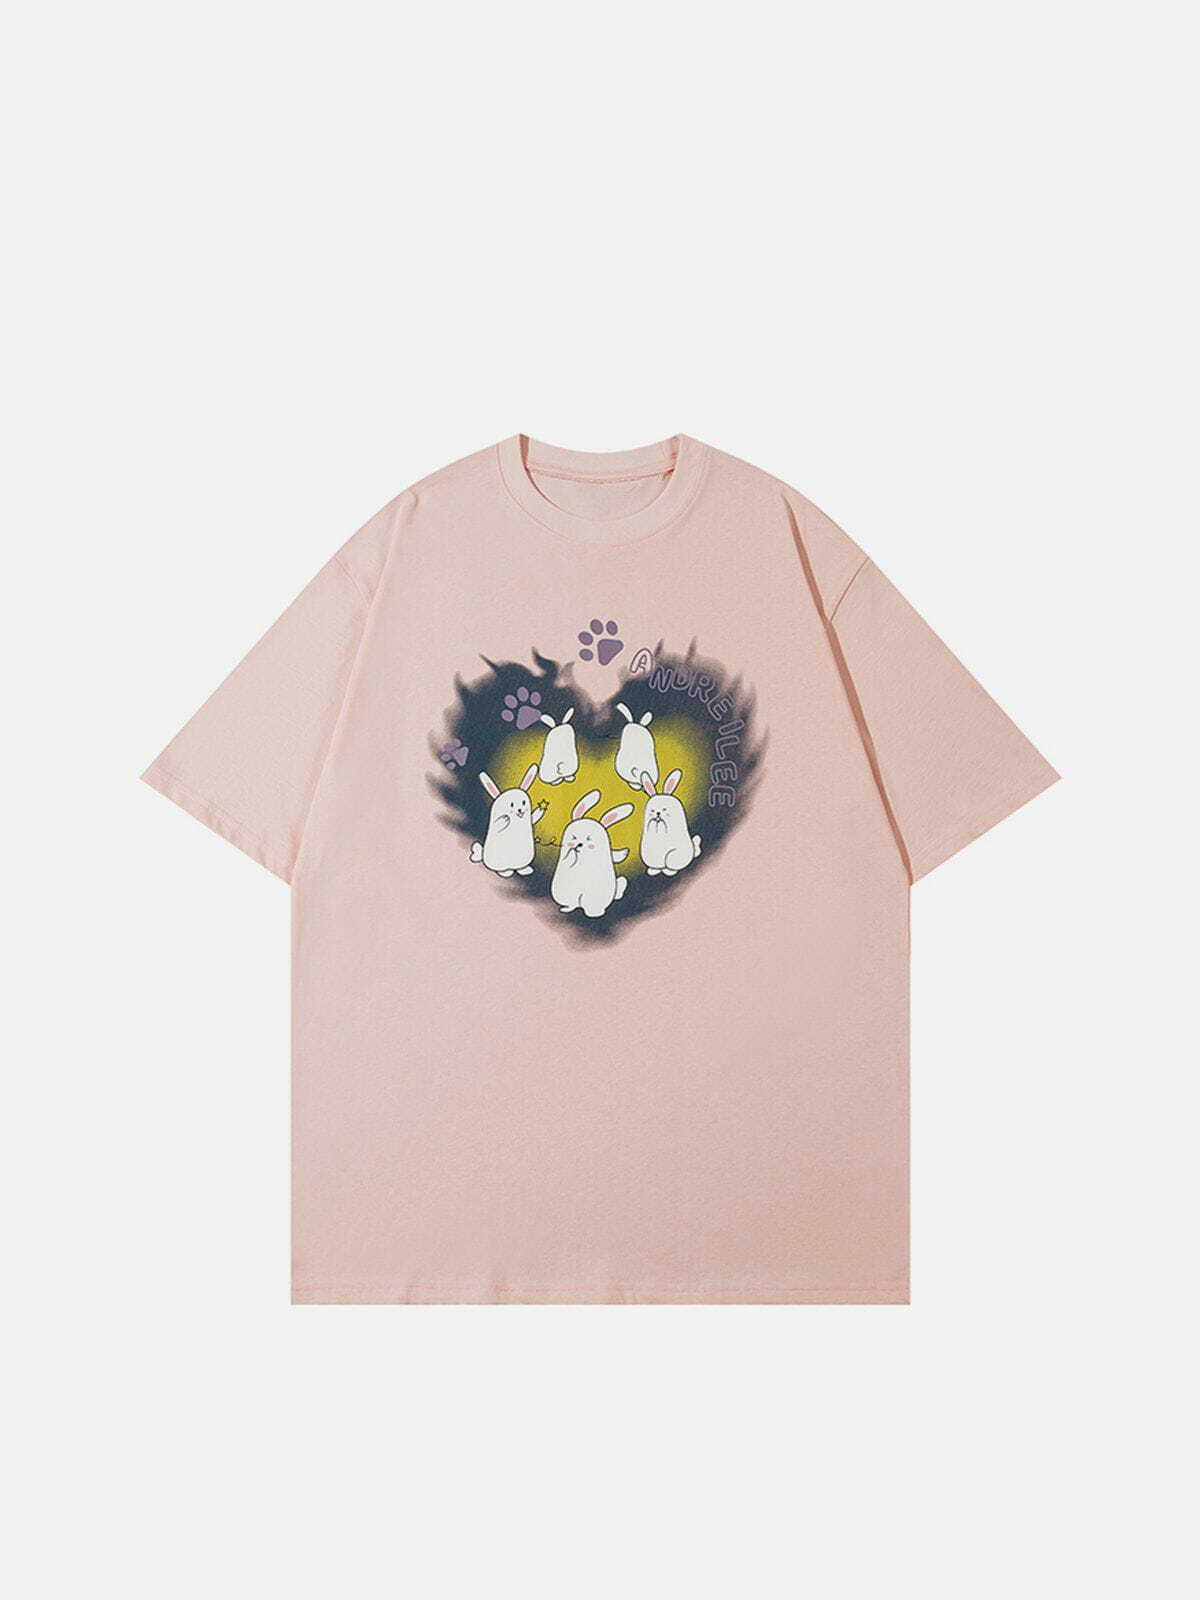 bold rabbit print tee edgy streetwear with vibrant heart elements 7022